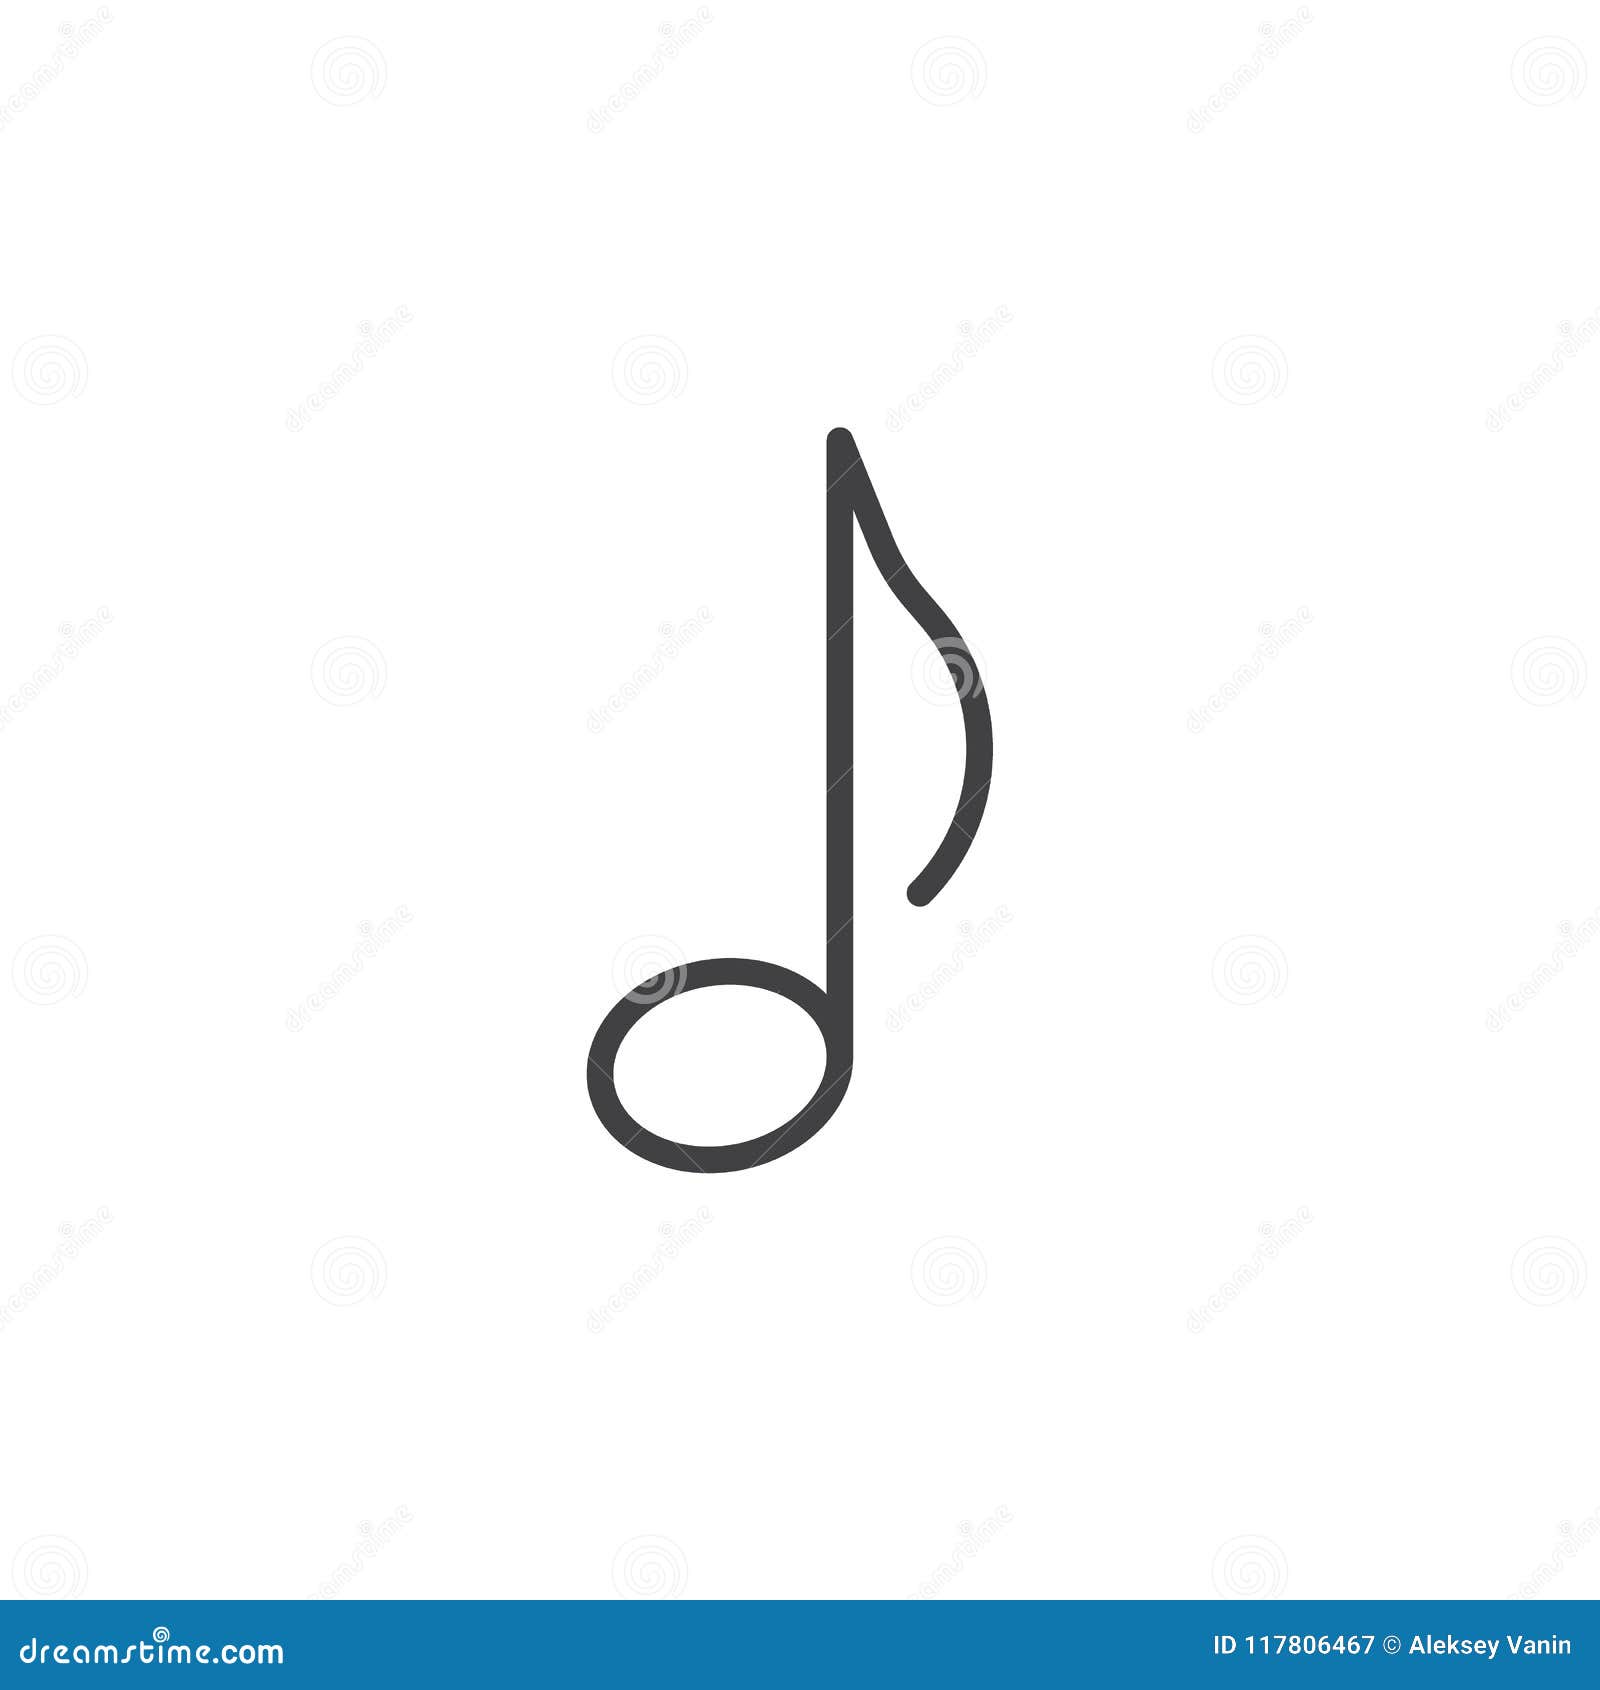 quaver music note outline icon